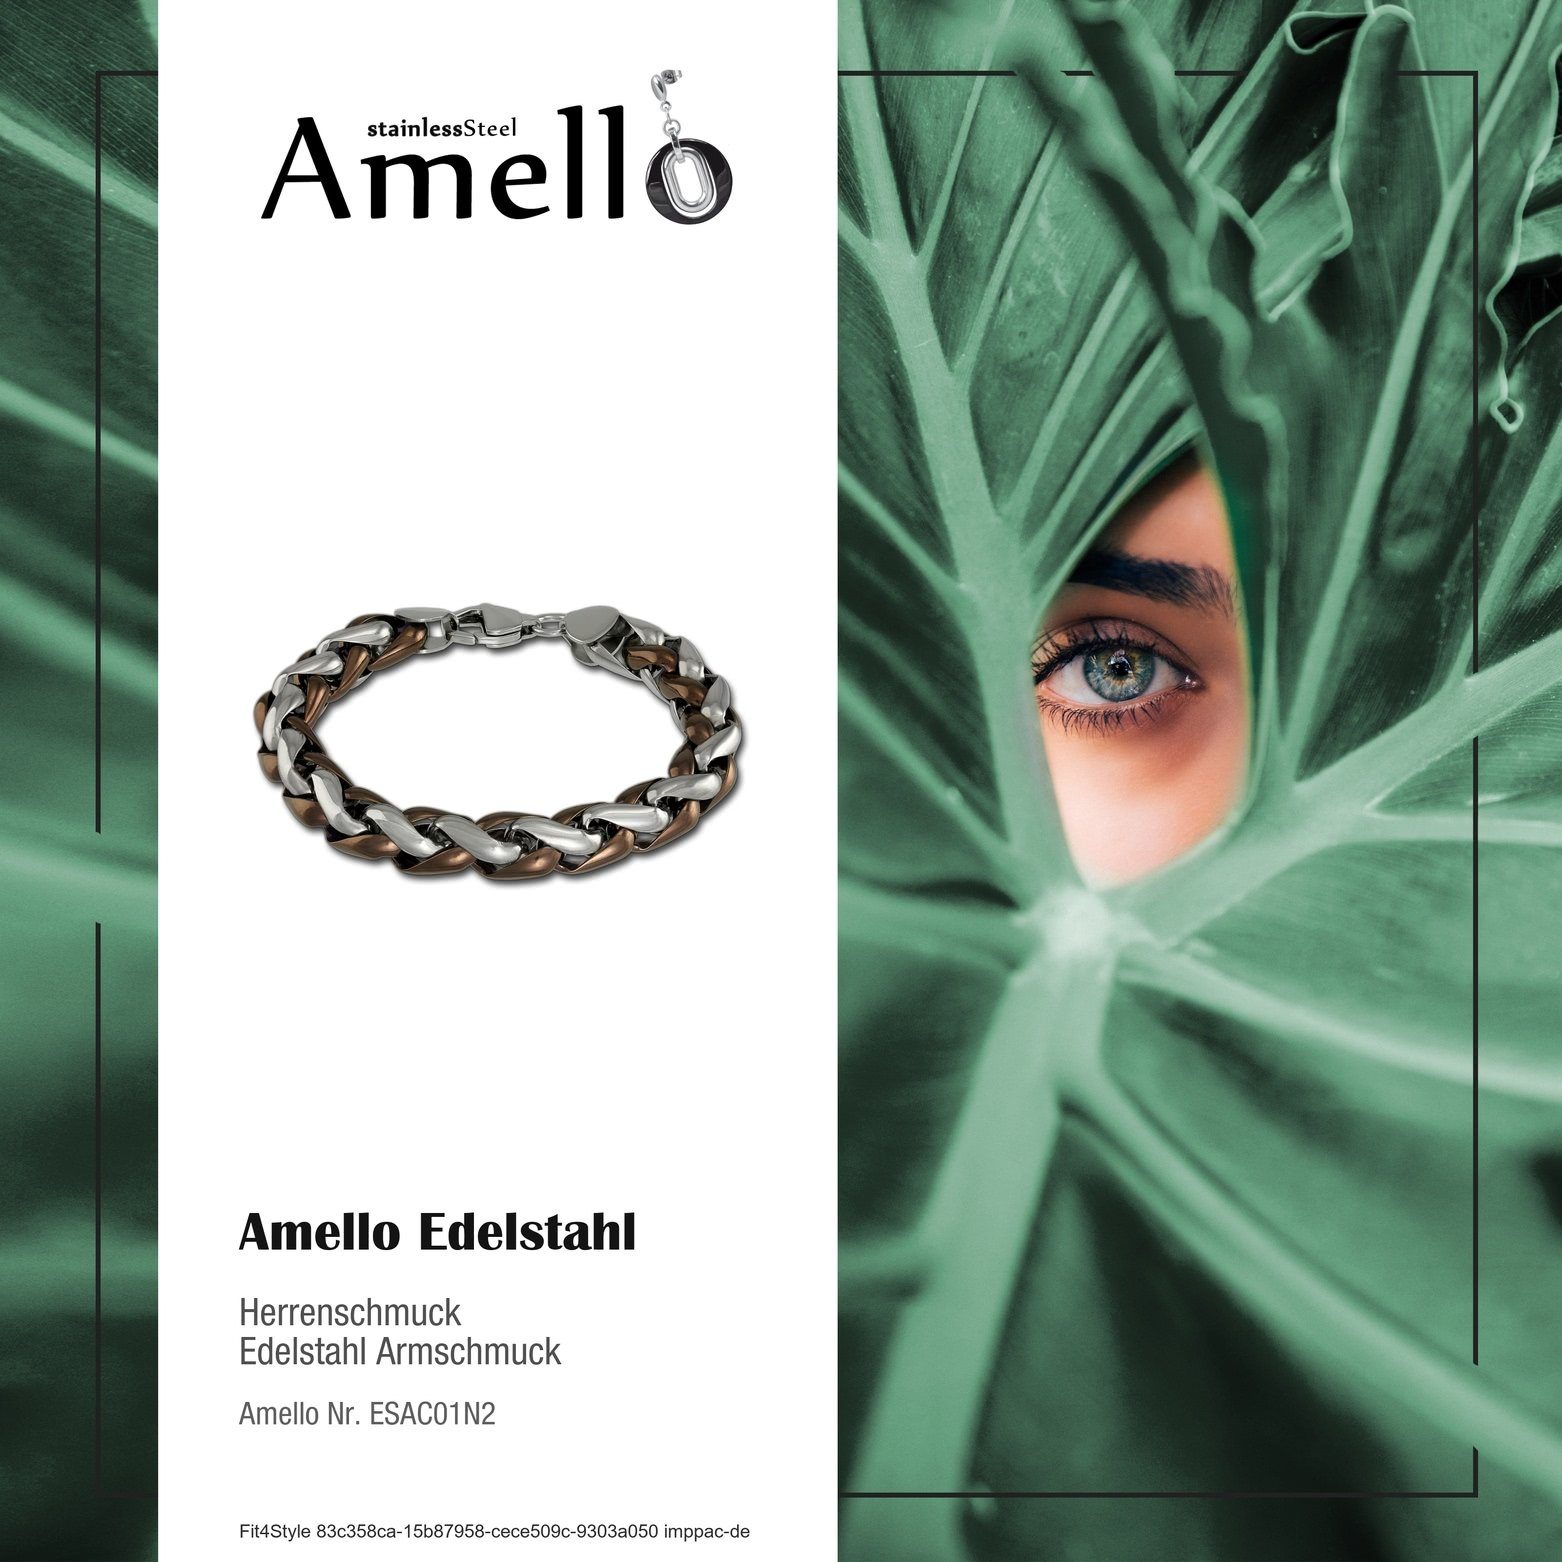 vergoldet Amello Edelstahl, (Rosegold bronzefarben Armband, roségold 333), Edelstahlarmband Herren geflochten Armband Amello (Armband),